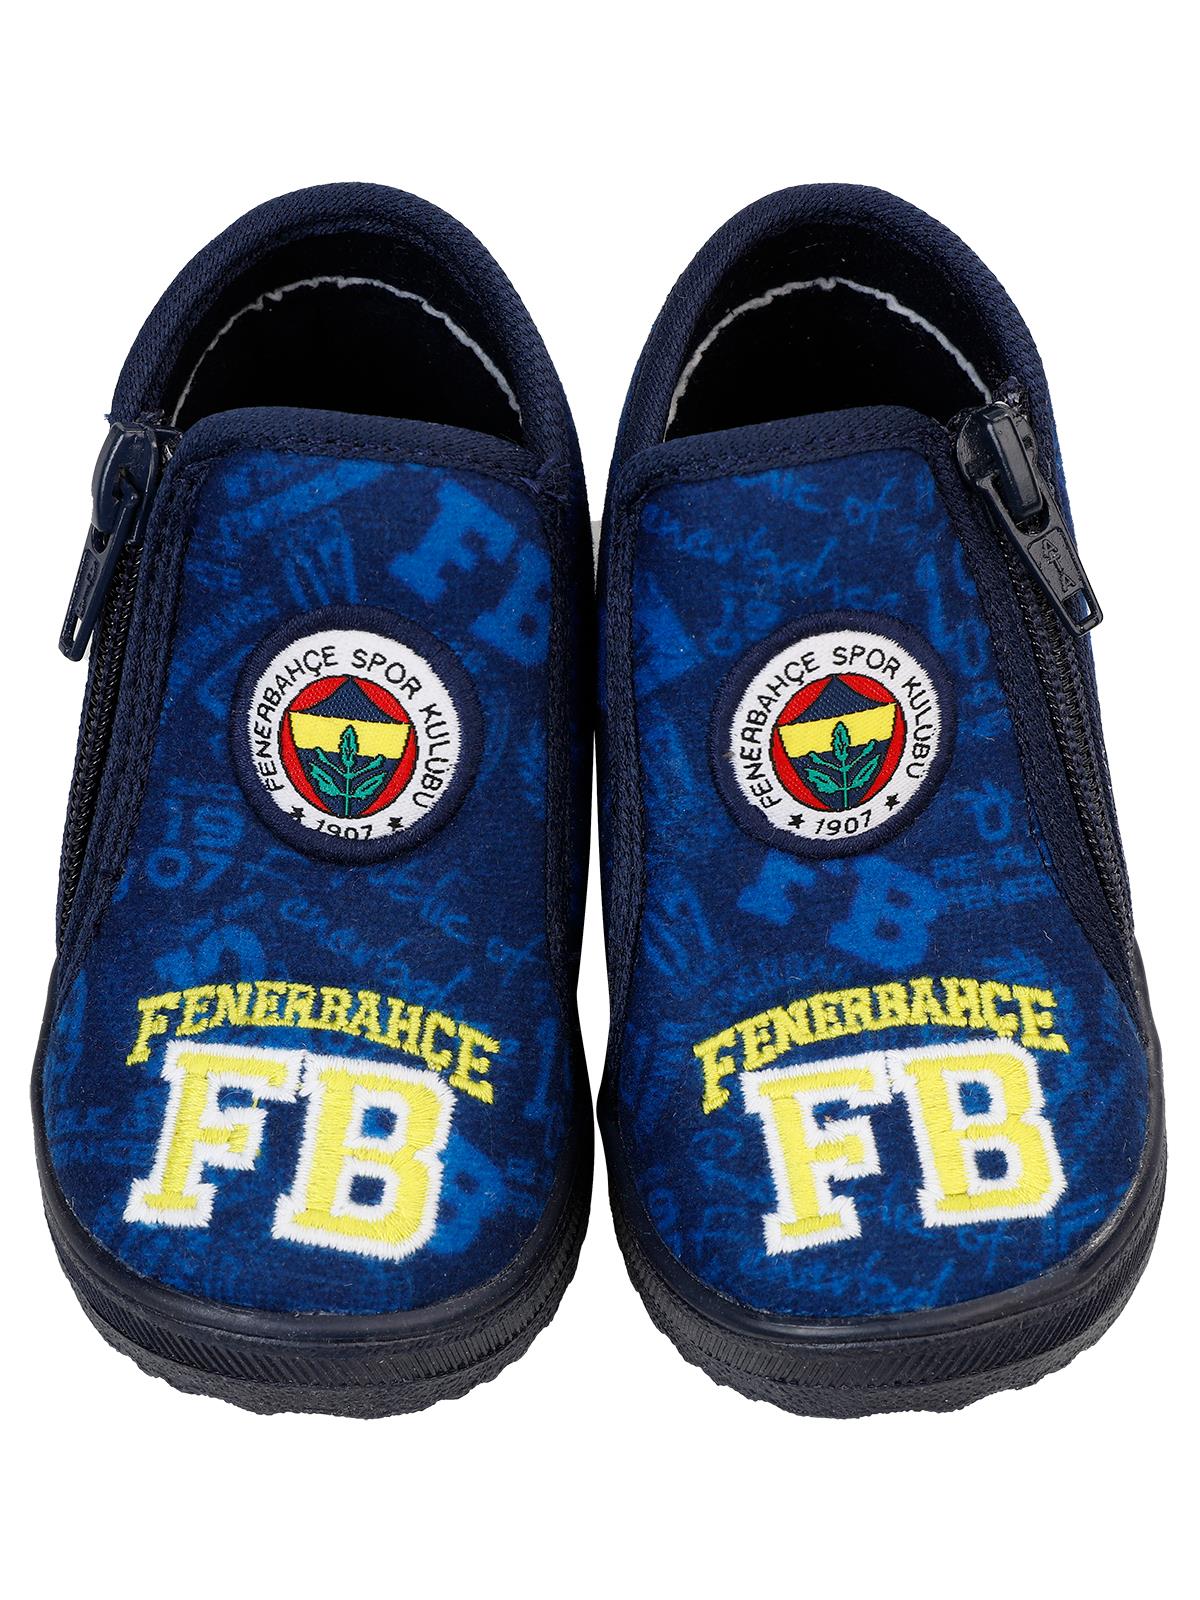 Fenerbahçe Erkek Çocuk Panduf 20-25 Numara Lacivert